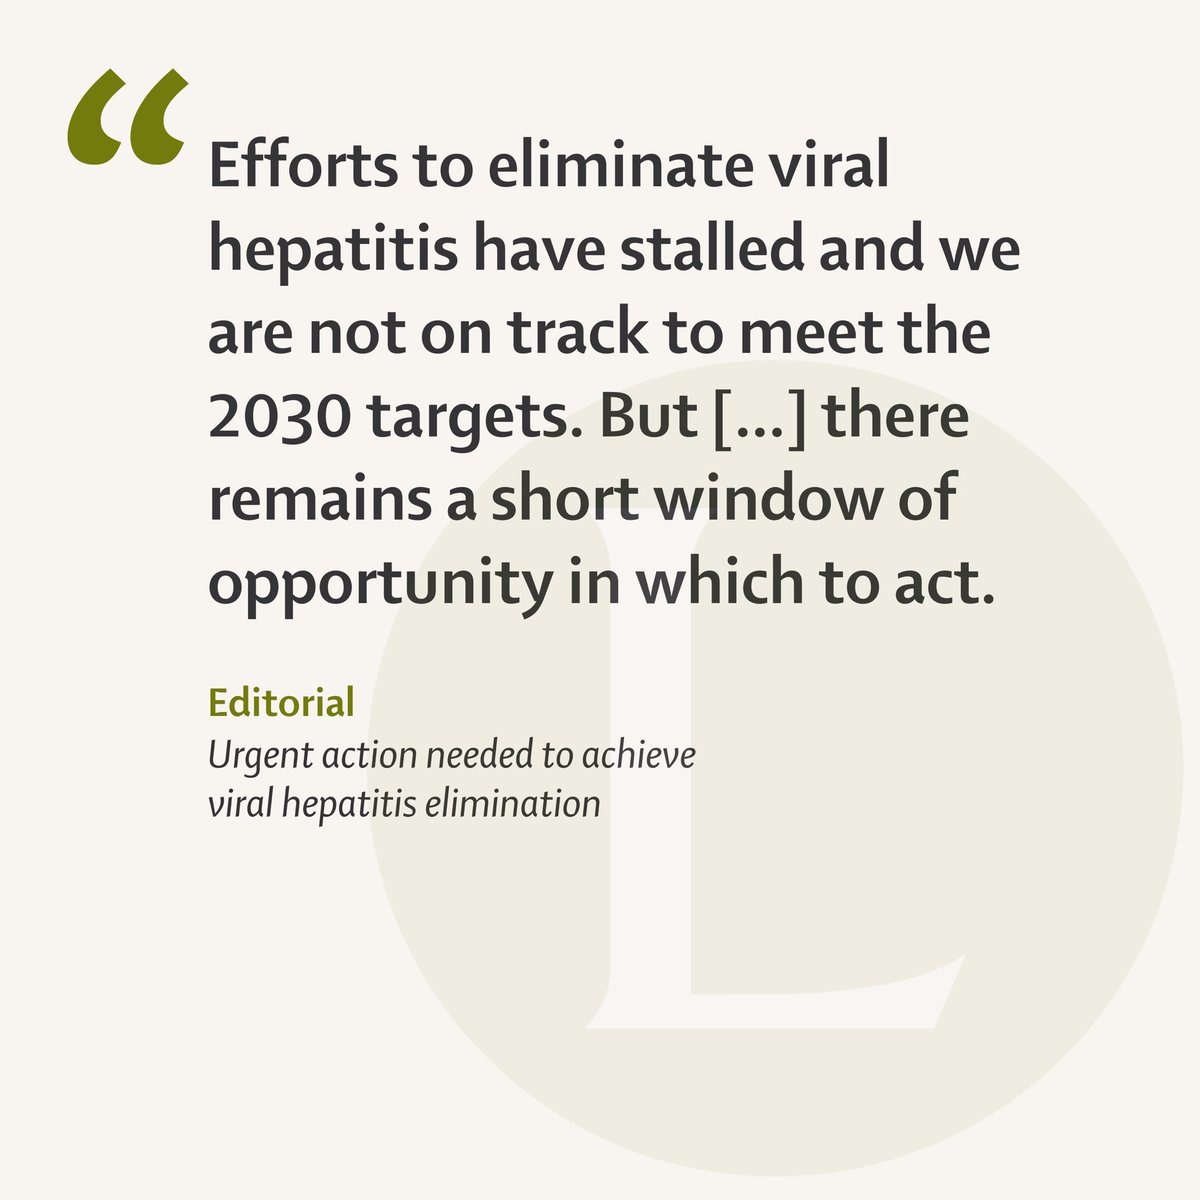 New Editorial - Urgent action needed to achieve viral hepatitis elimination thelancet.com/journals/langa… #NoHep #LiverTwitter